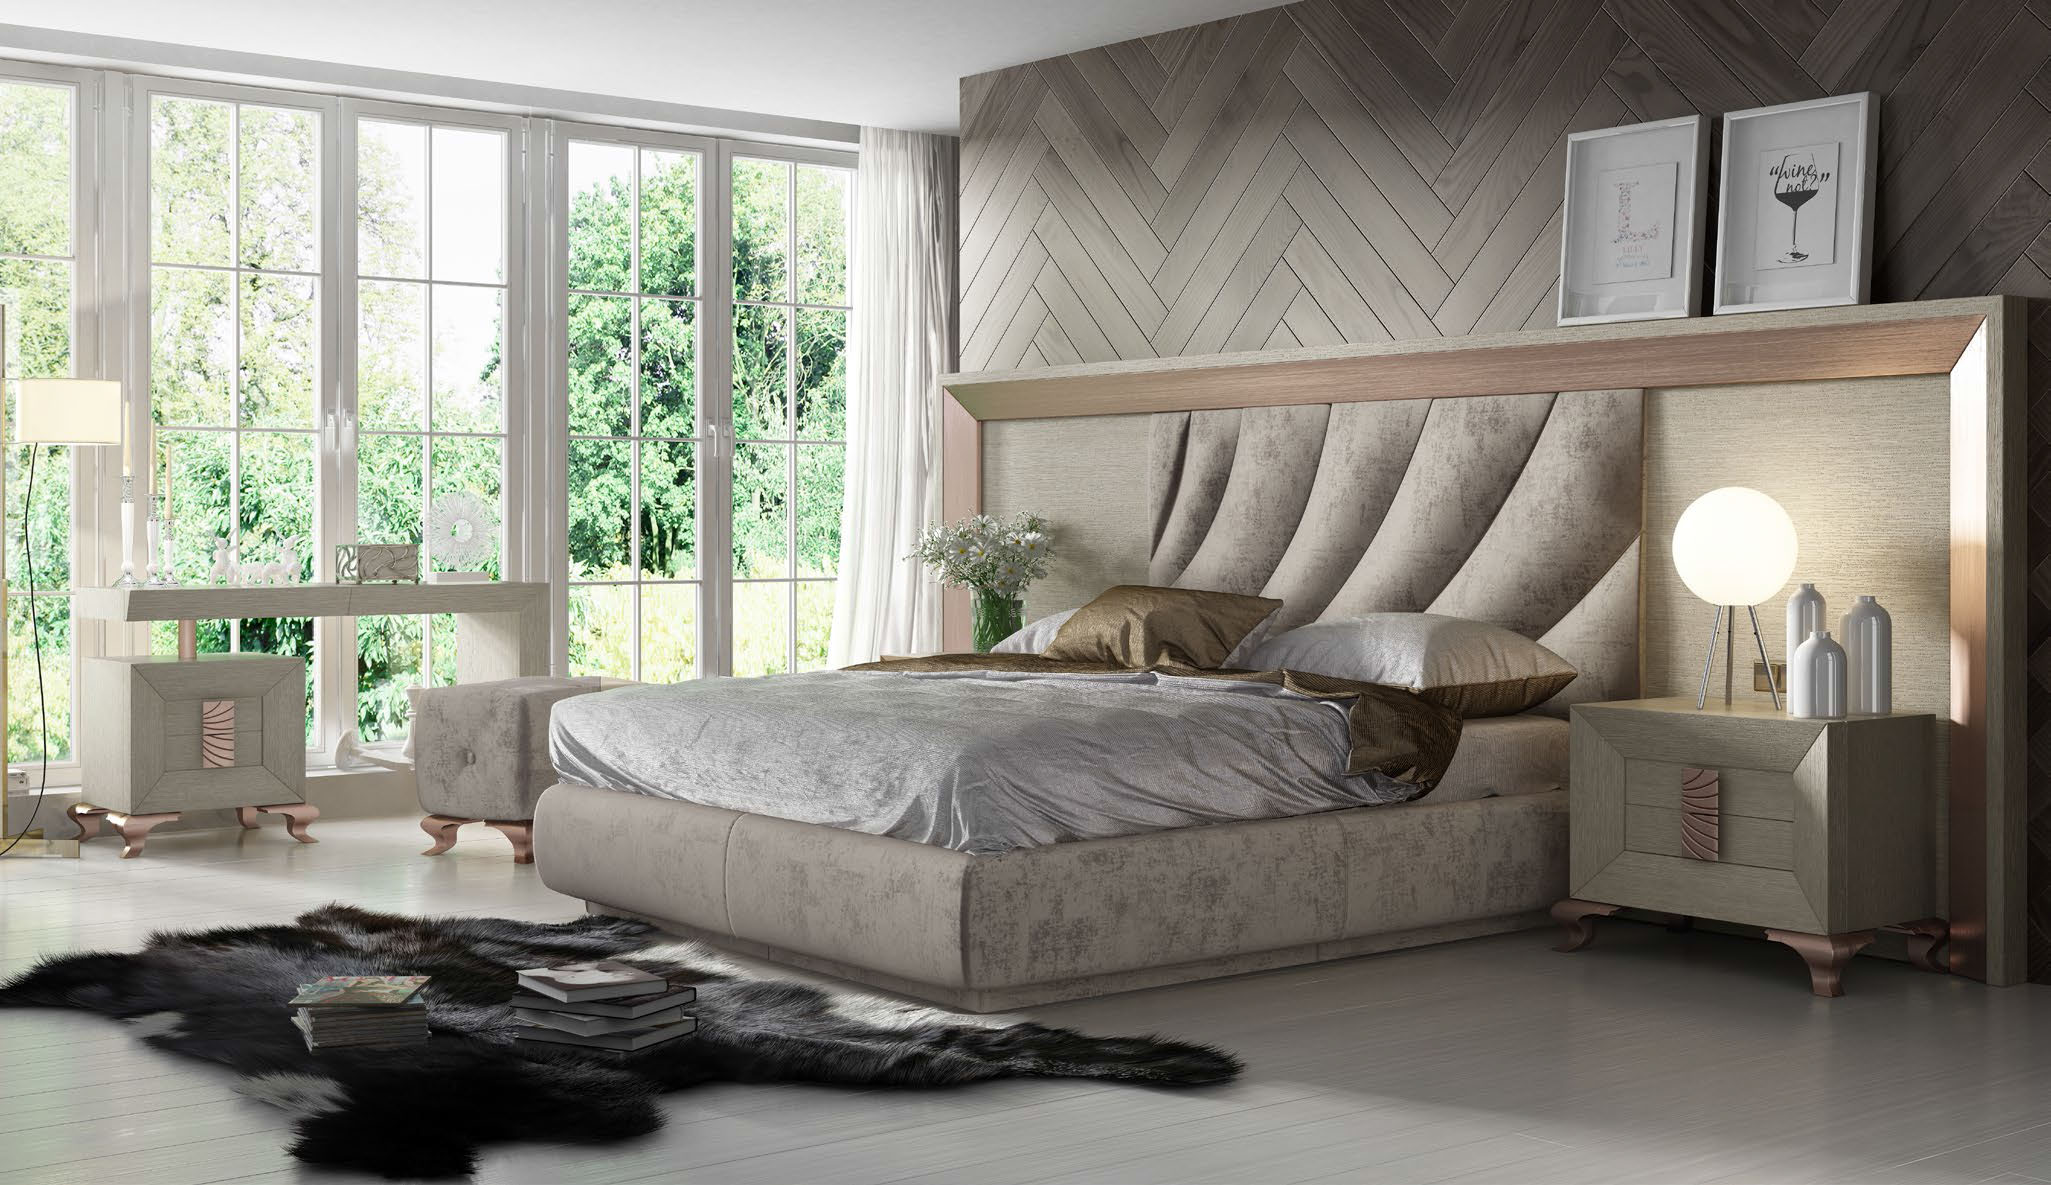 Brands Franco Furniture Bedrooms vol1, Spain DOR 126